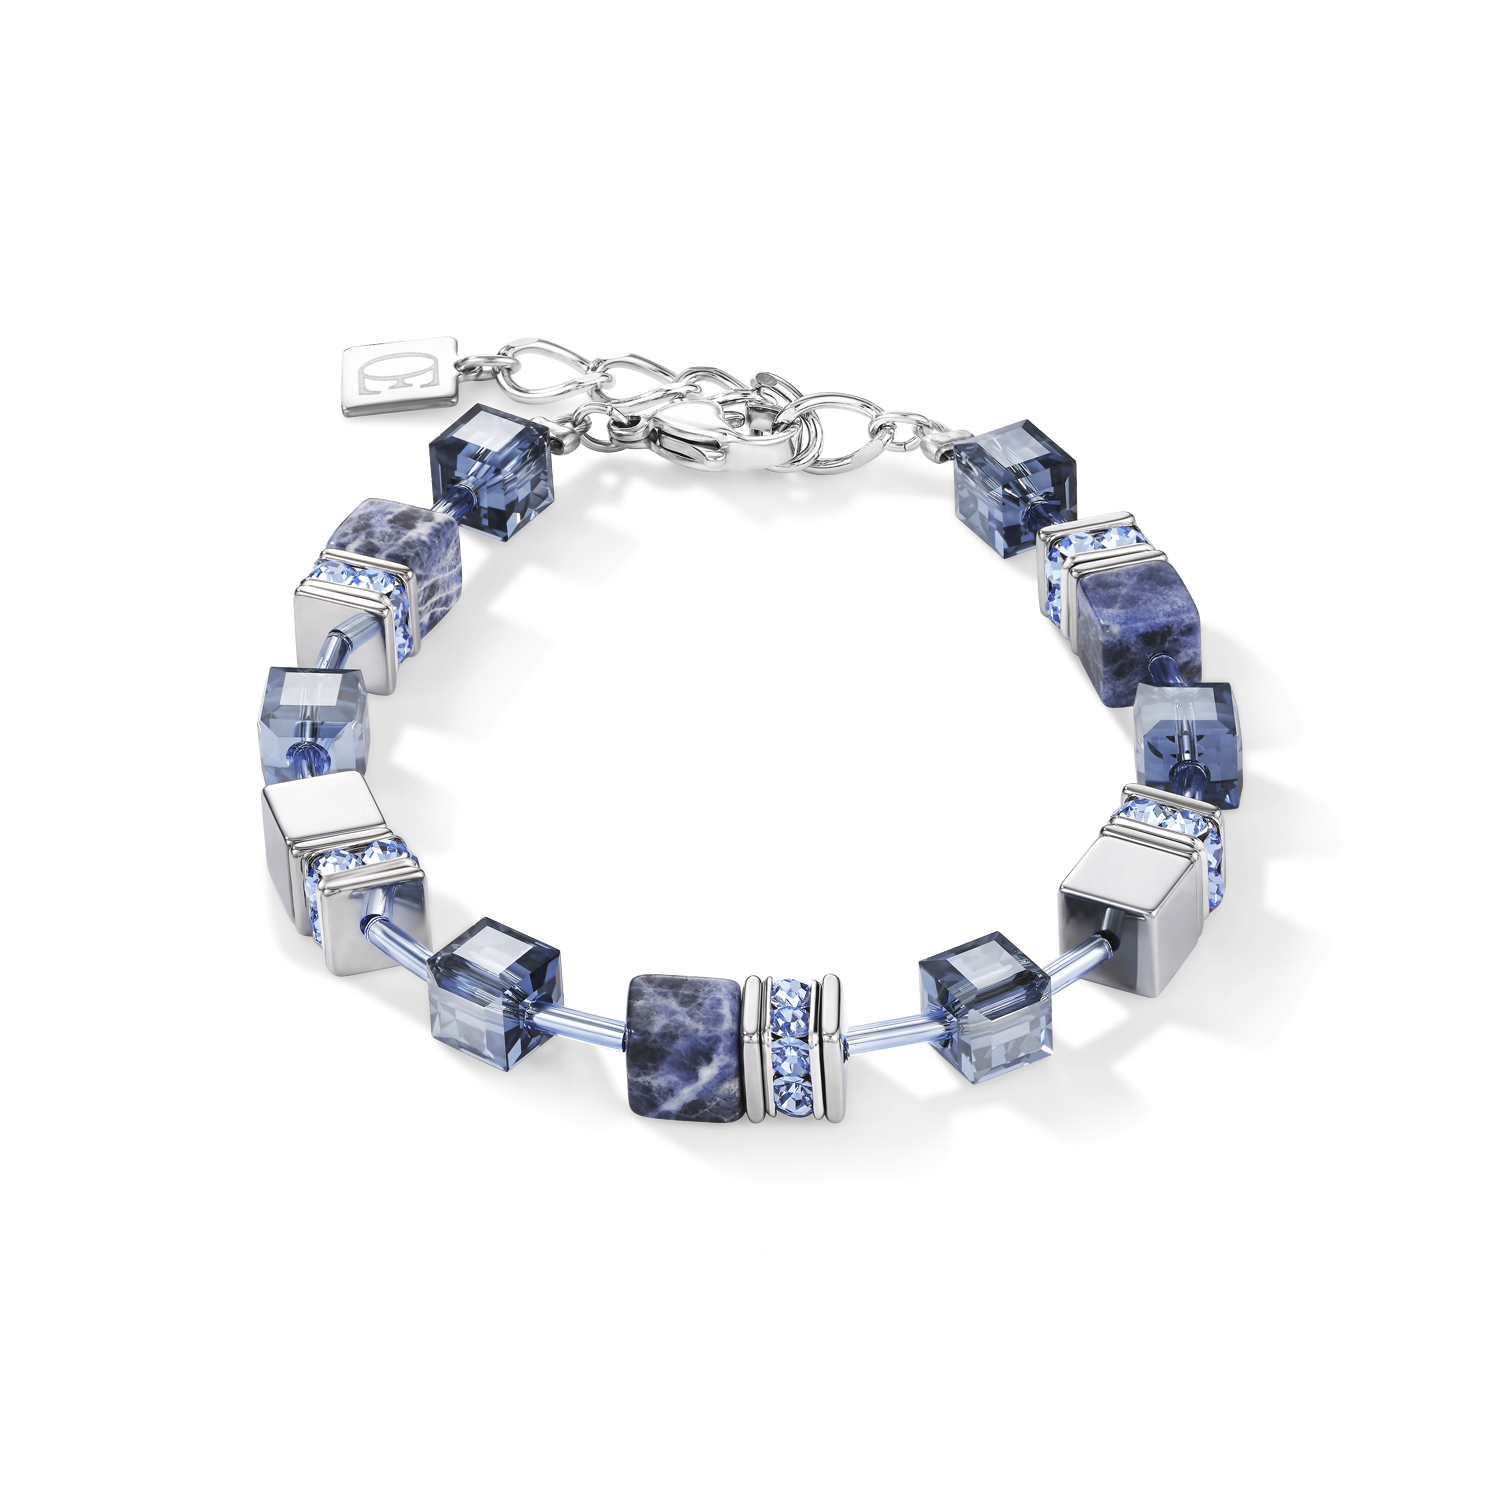 Bracelet GeoCUBE® sodalite & hématite bleu